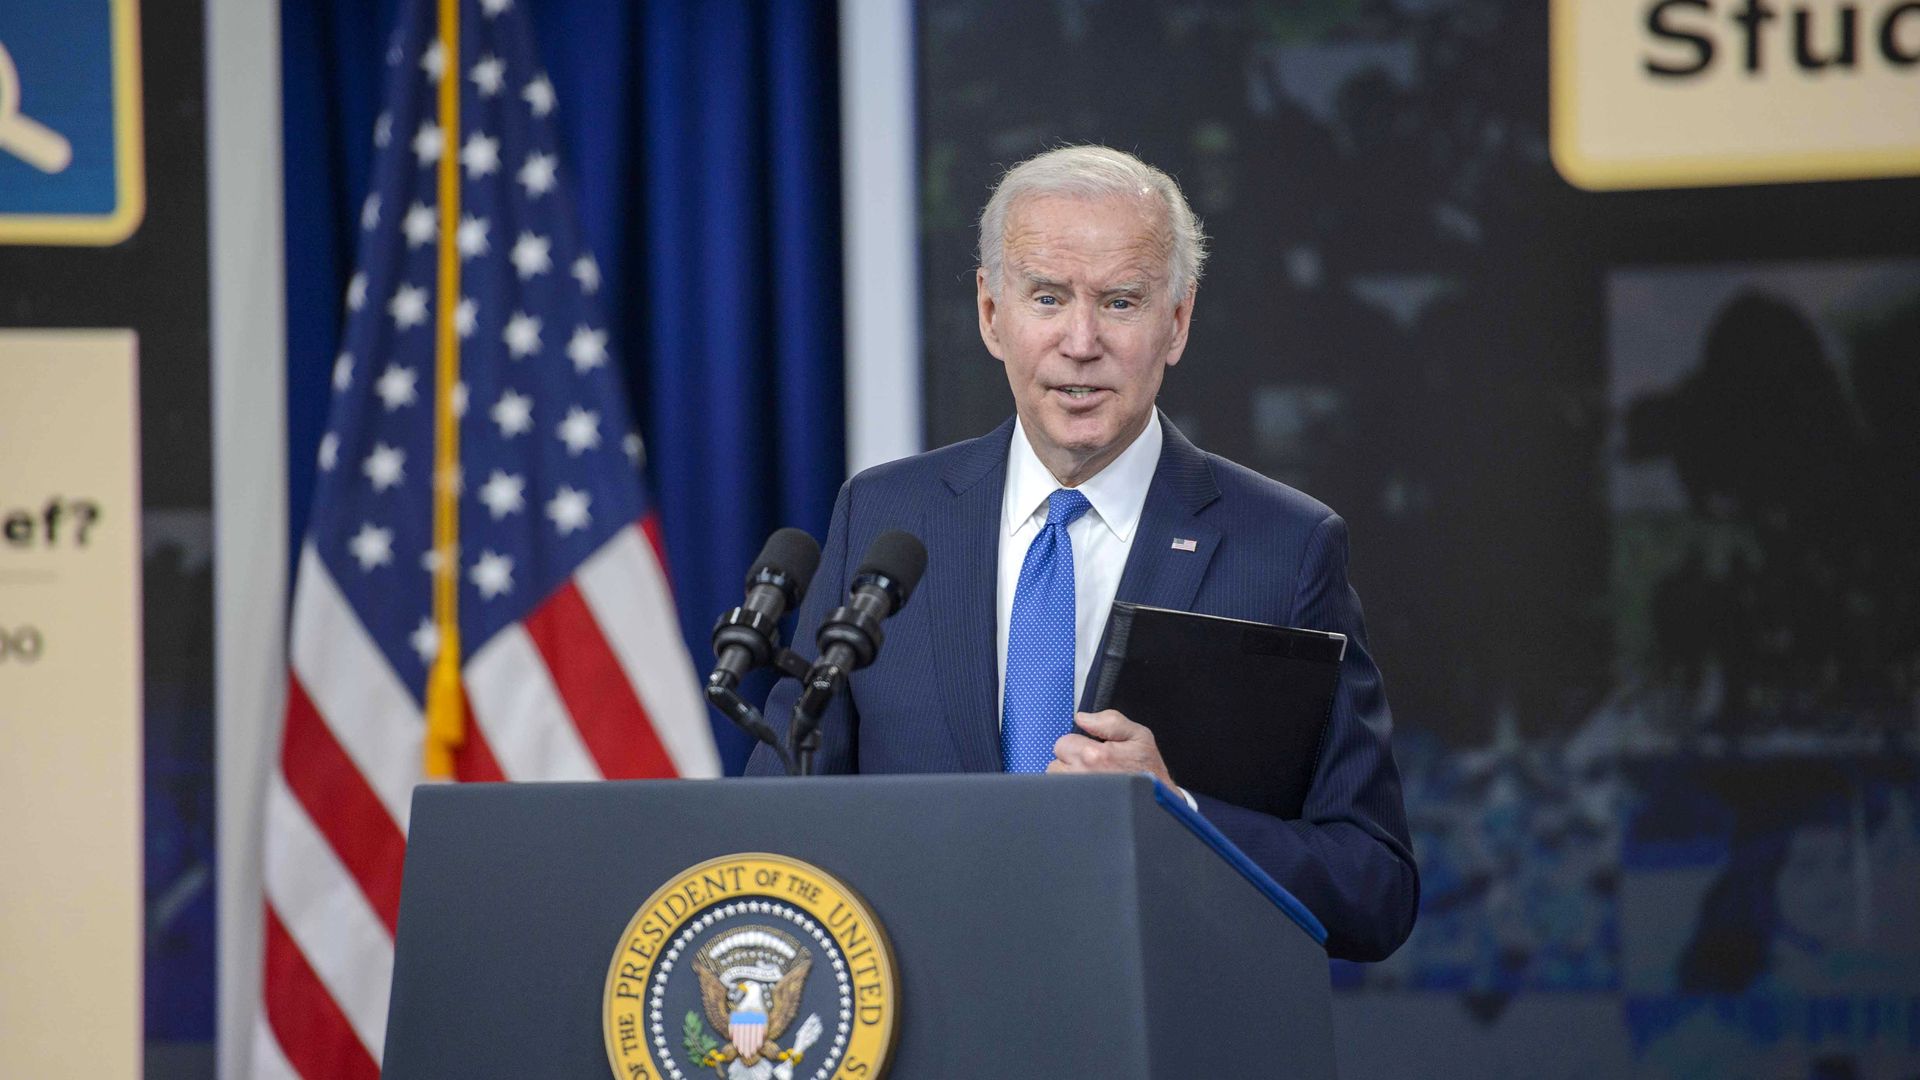 President Biden speaking at podium